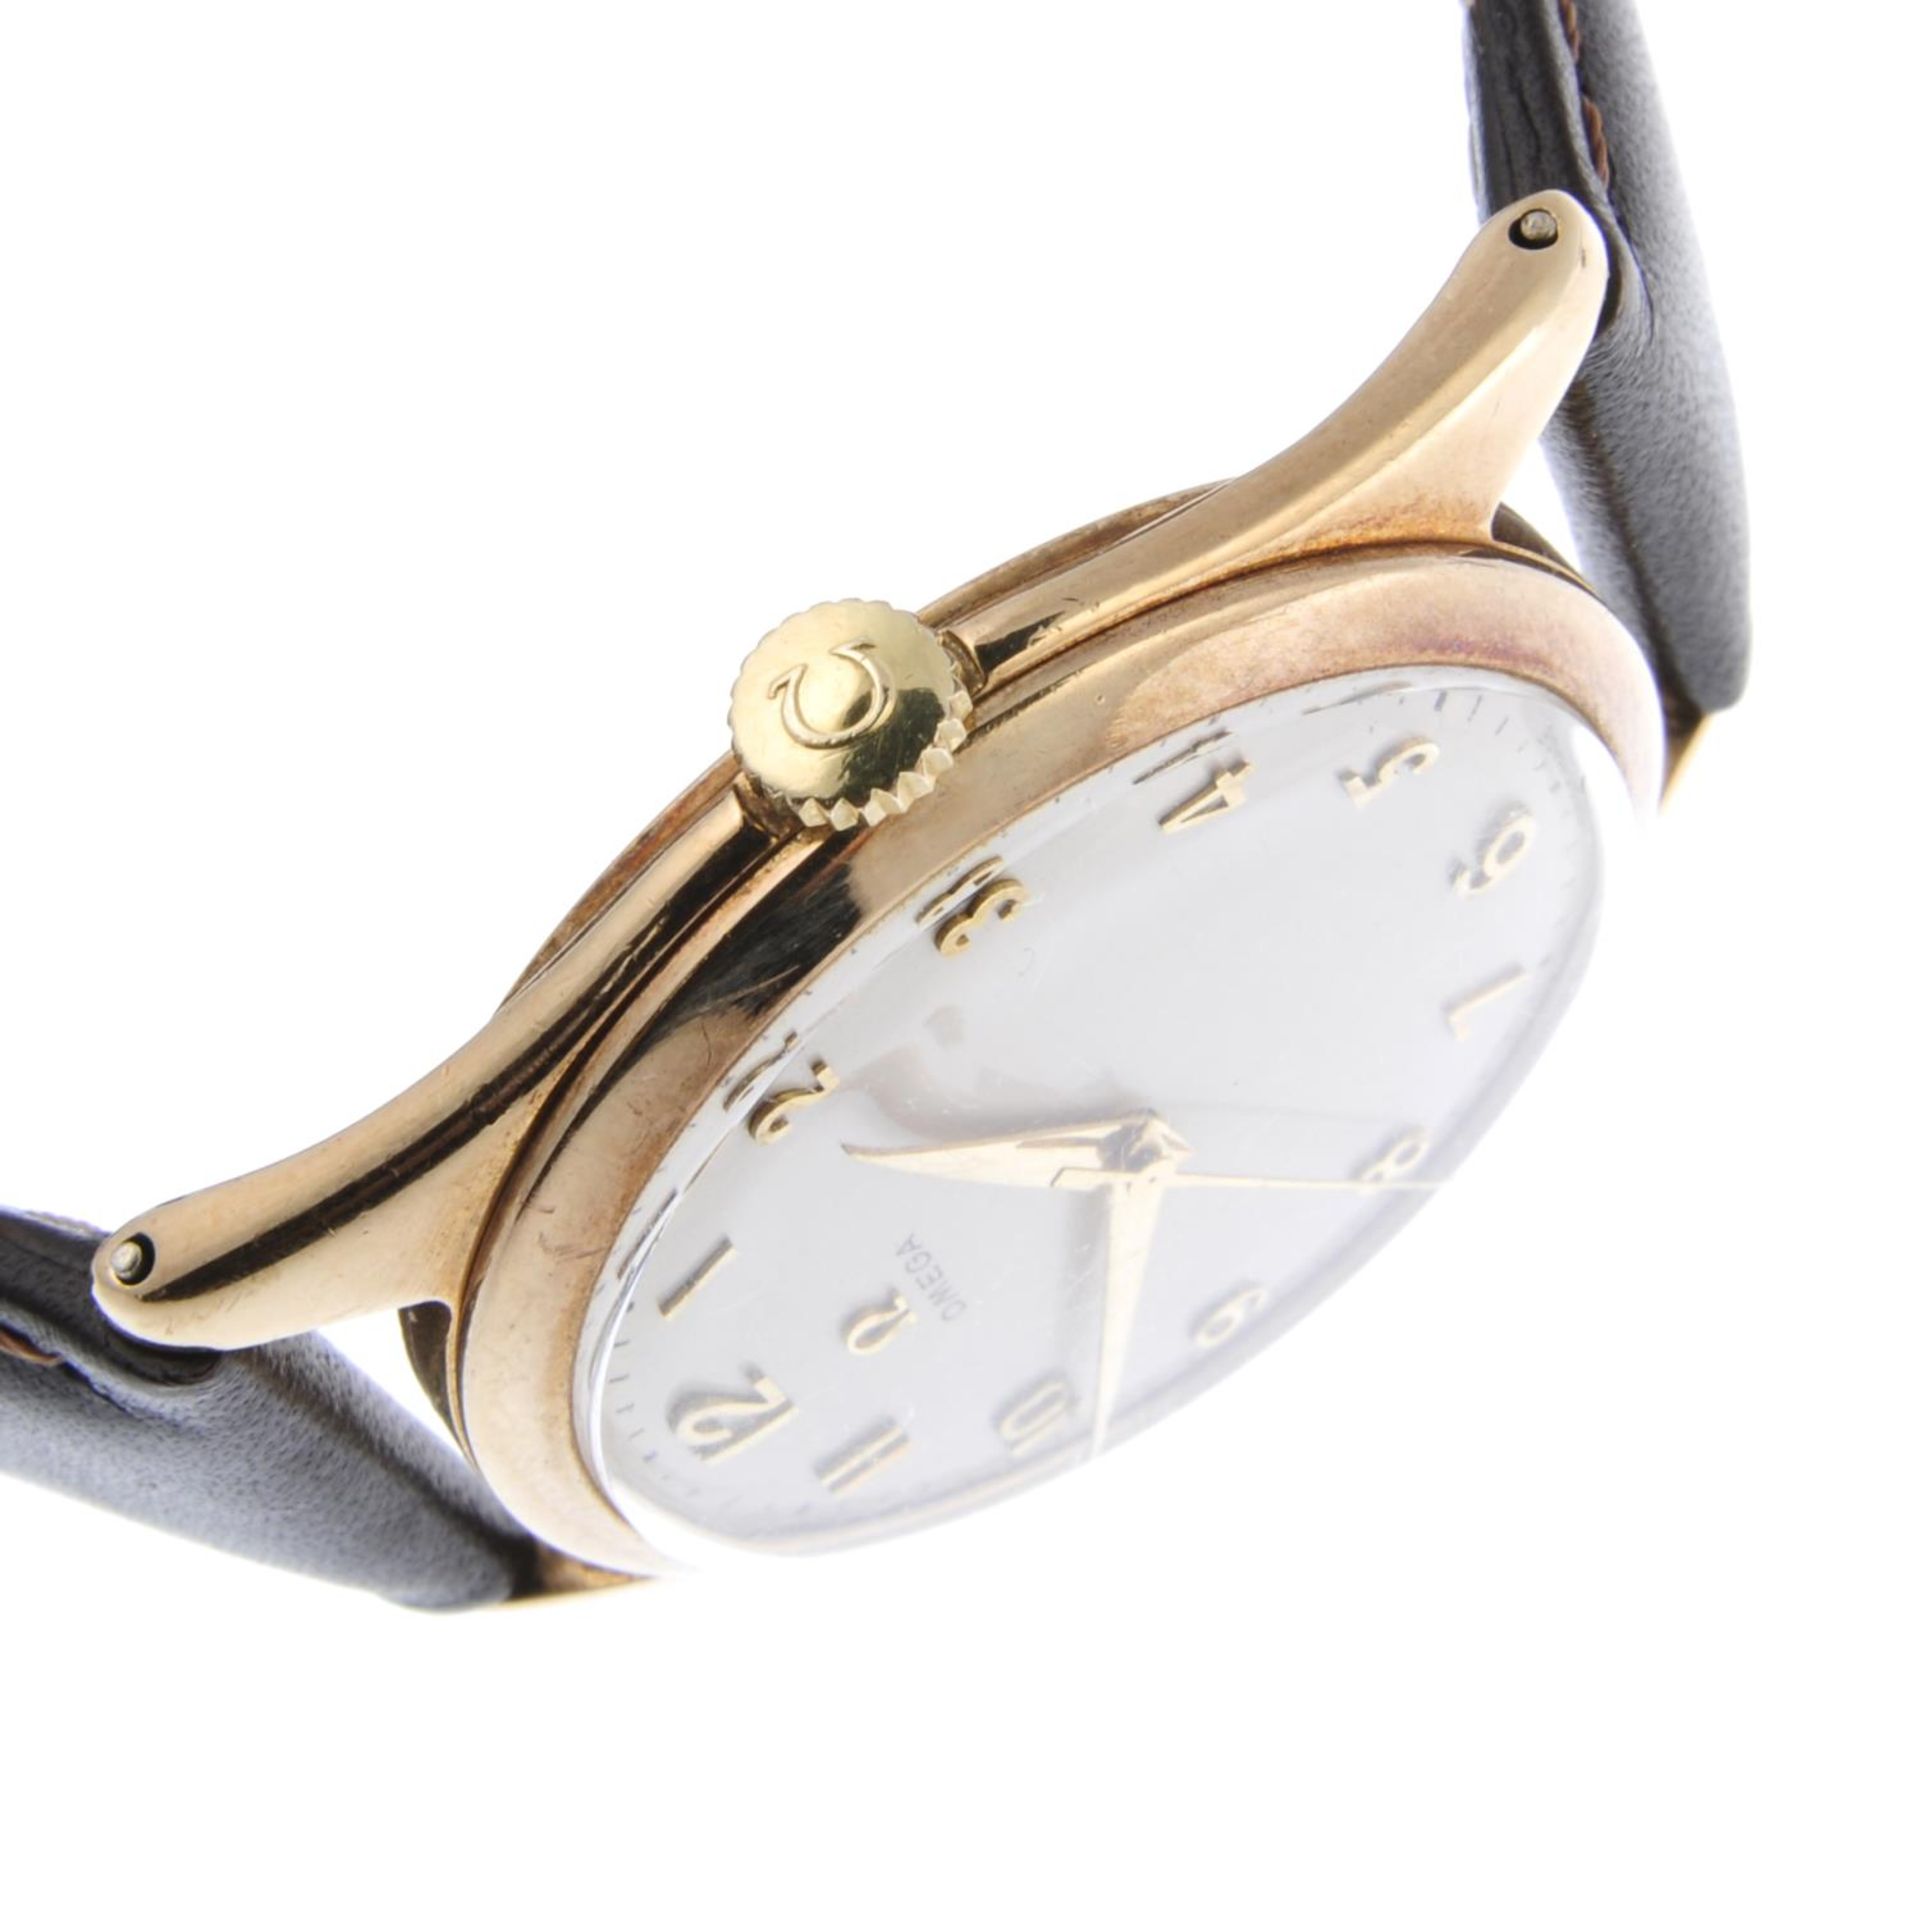 OMEGA - a gentleman's wrist watch. - Image 4 of 4